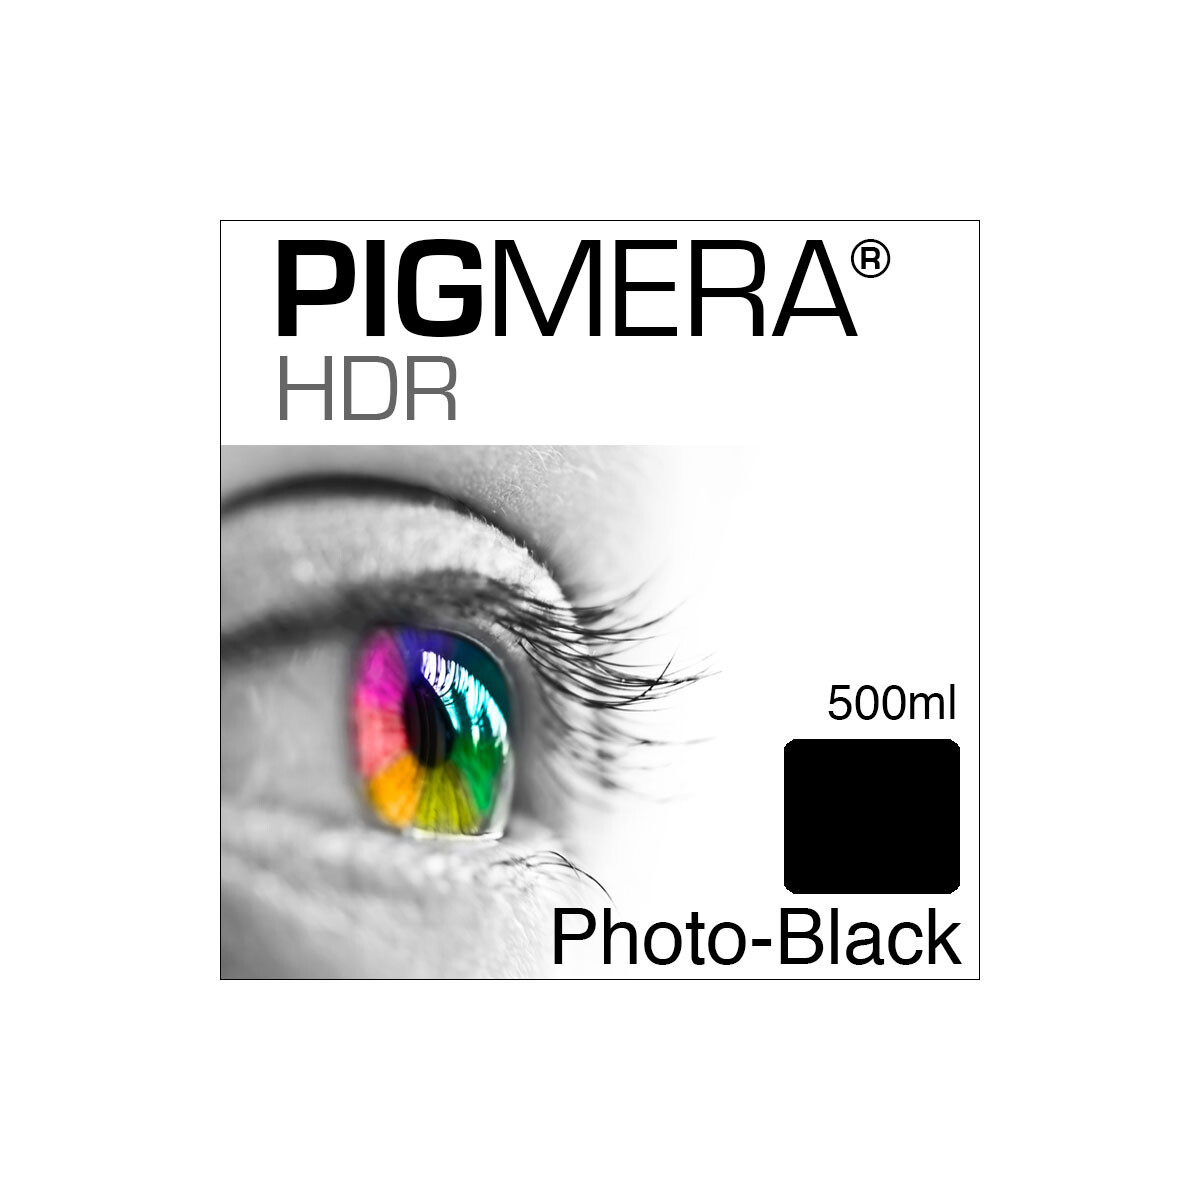 farbenwerk Pigmera HDR Bottle Photo-Black 500ml